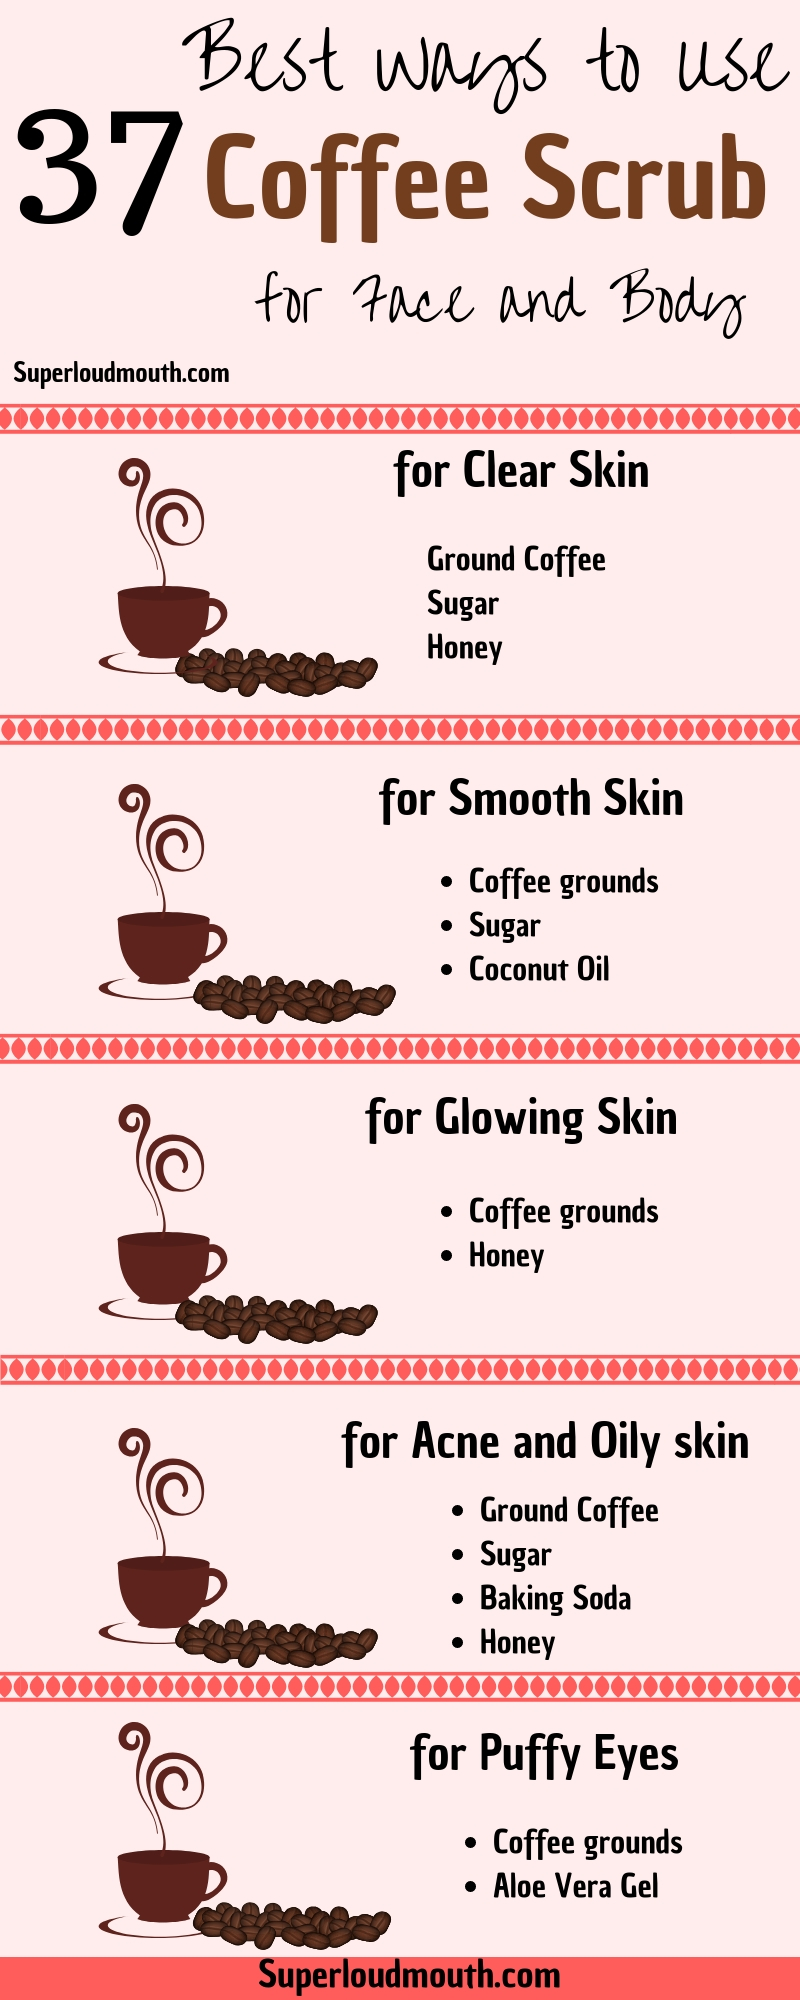 37 Diy Coffee Scrub Recipes for a Beautiful Face, Body and Cellulite - 37 Diy Coffee Scrub Recipes for a Beautiful Face, Body and Cellulite -   18 beauty DIY face ideas